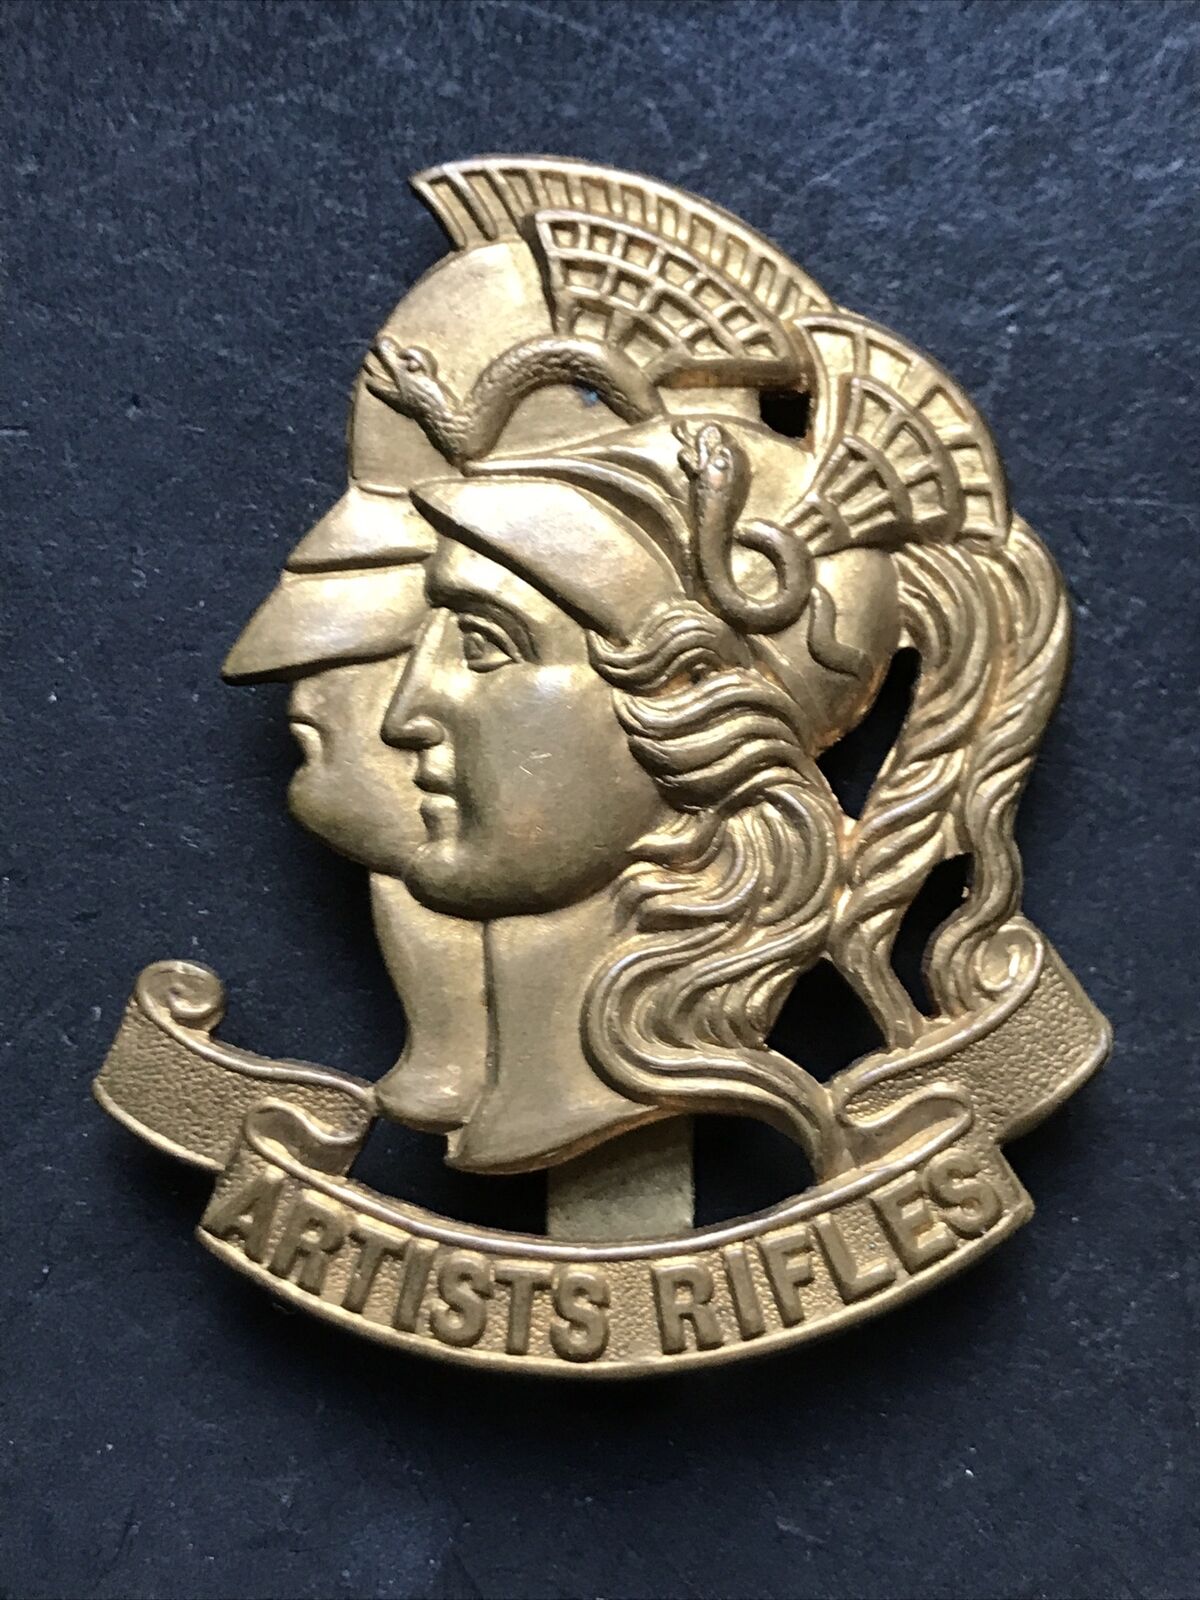 Artists Rifles-28th County Of London-SAS-Original Cap Badge